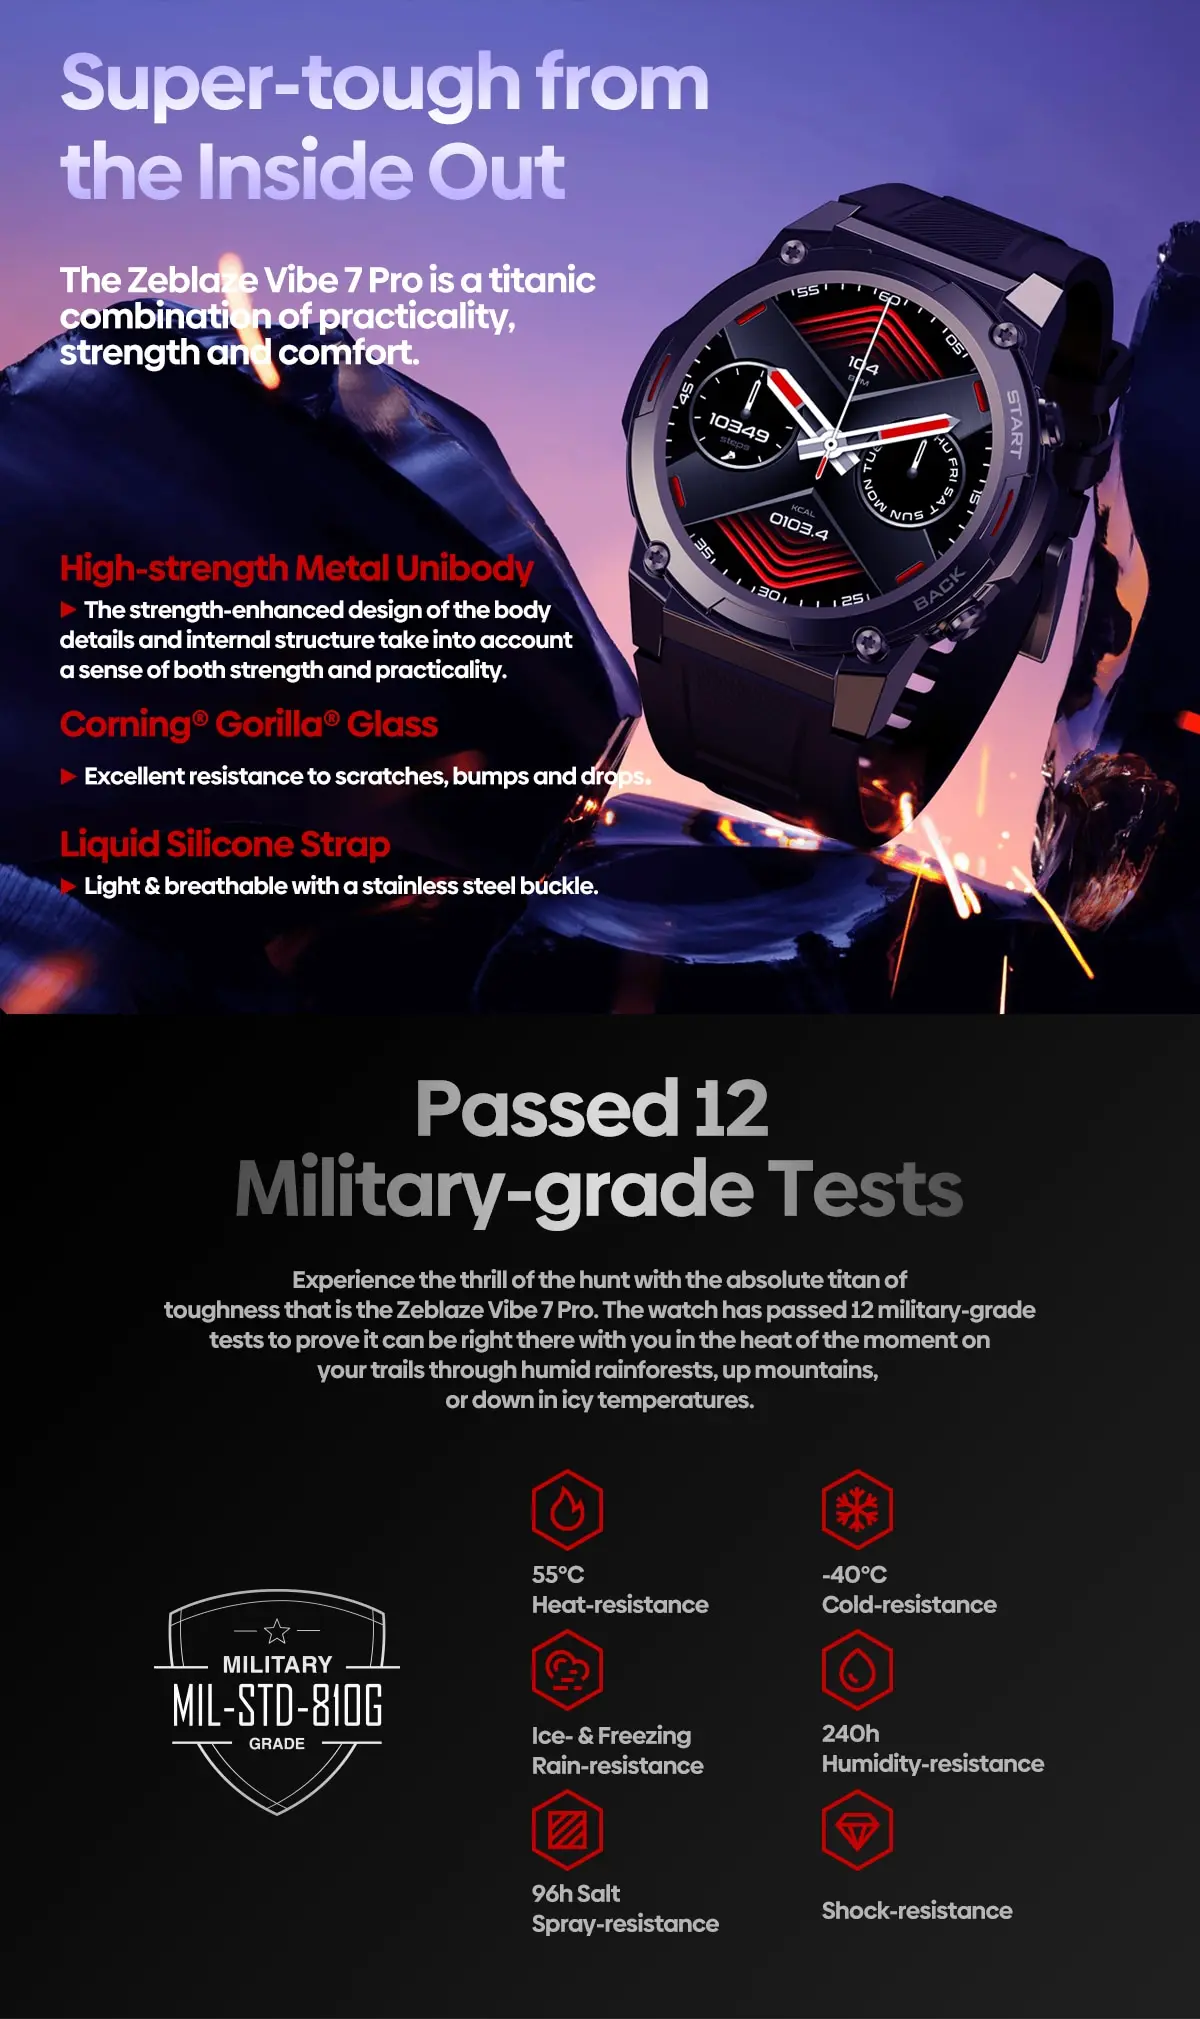 Zeblaze VIBE 7 PRO Voice Calling Smart Watch 1.43 Inch AMOLED Display Hi Fi Phone Calls Military Grade Toughness Watch